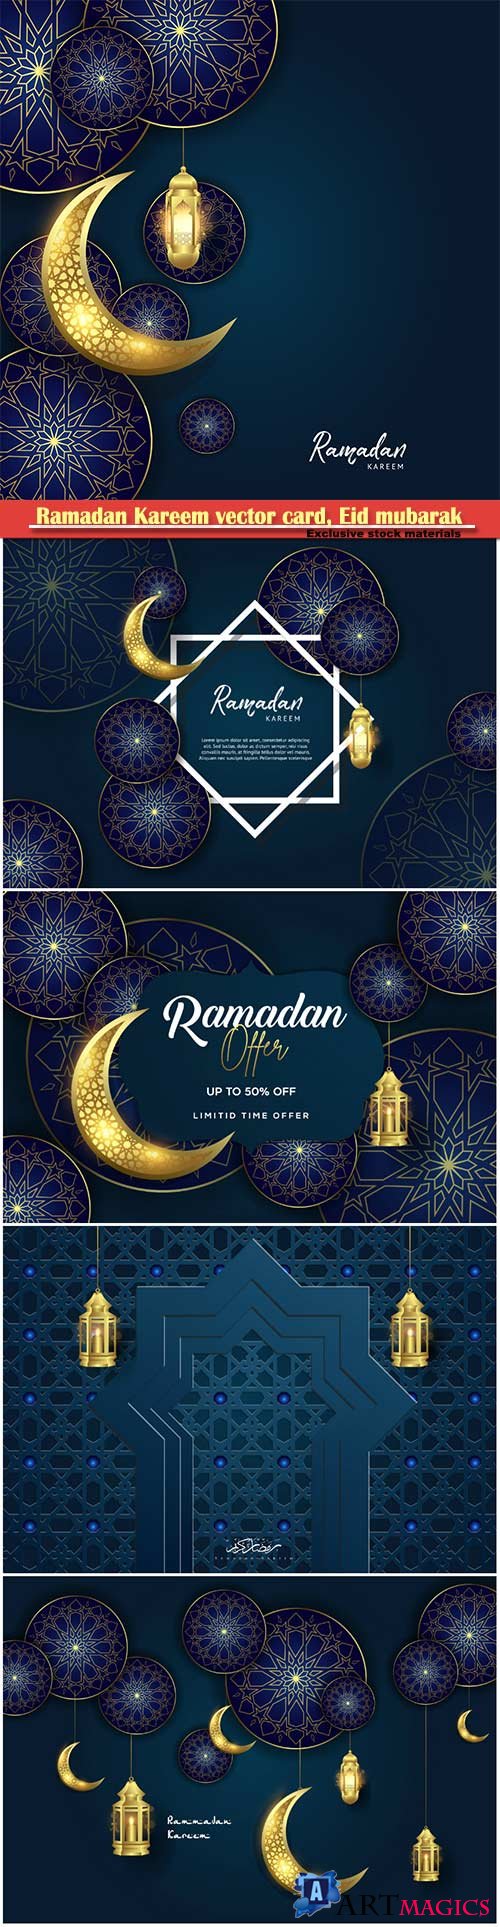 Ramadan Kareem vector card, Eid mubarak calligraphy design templates # 13